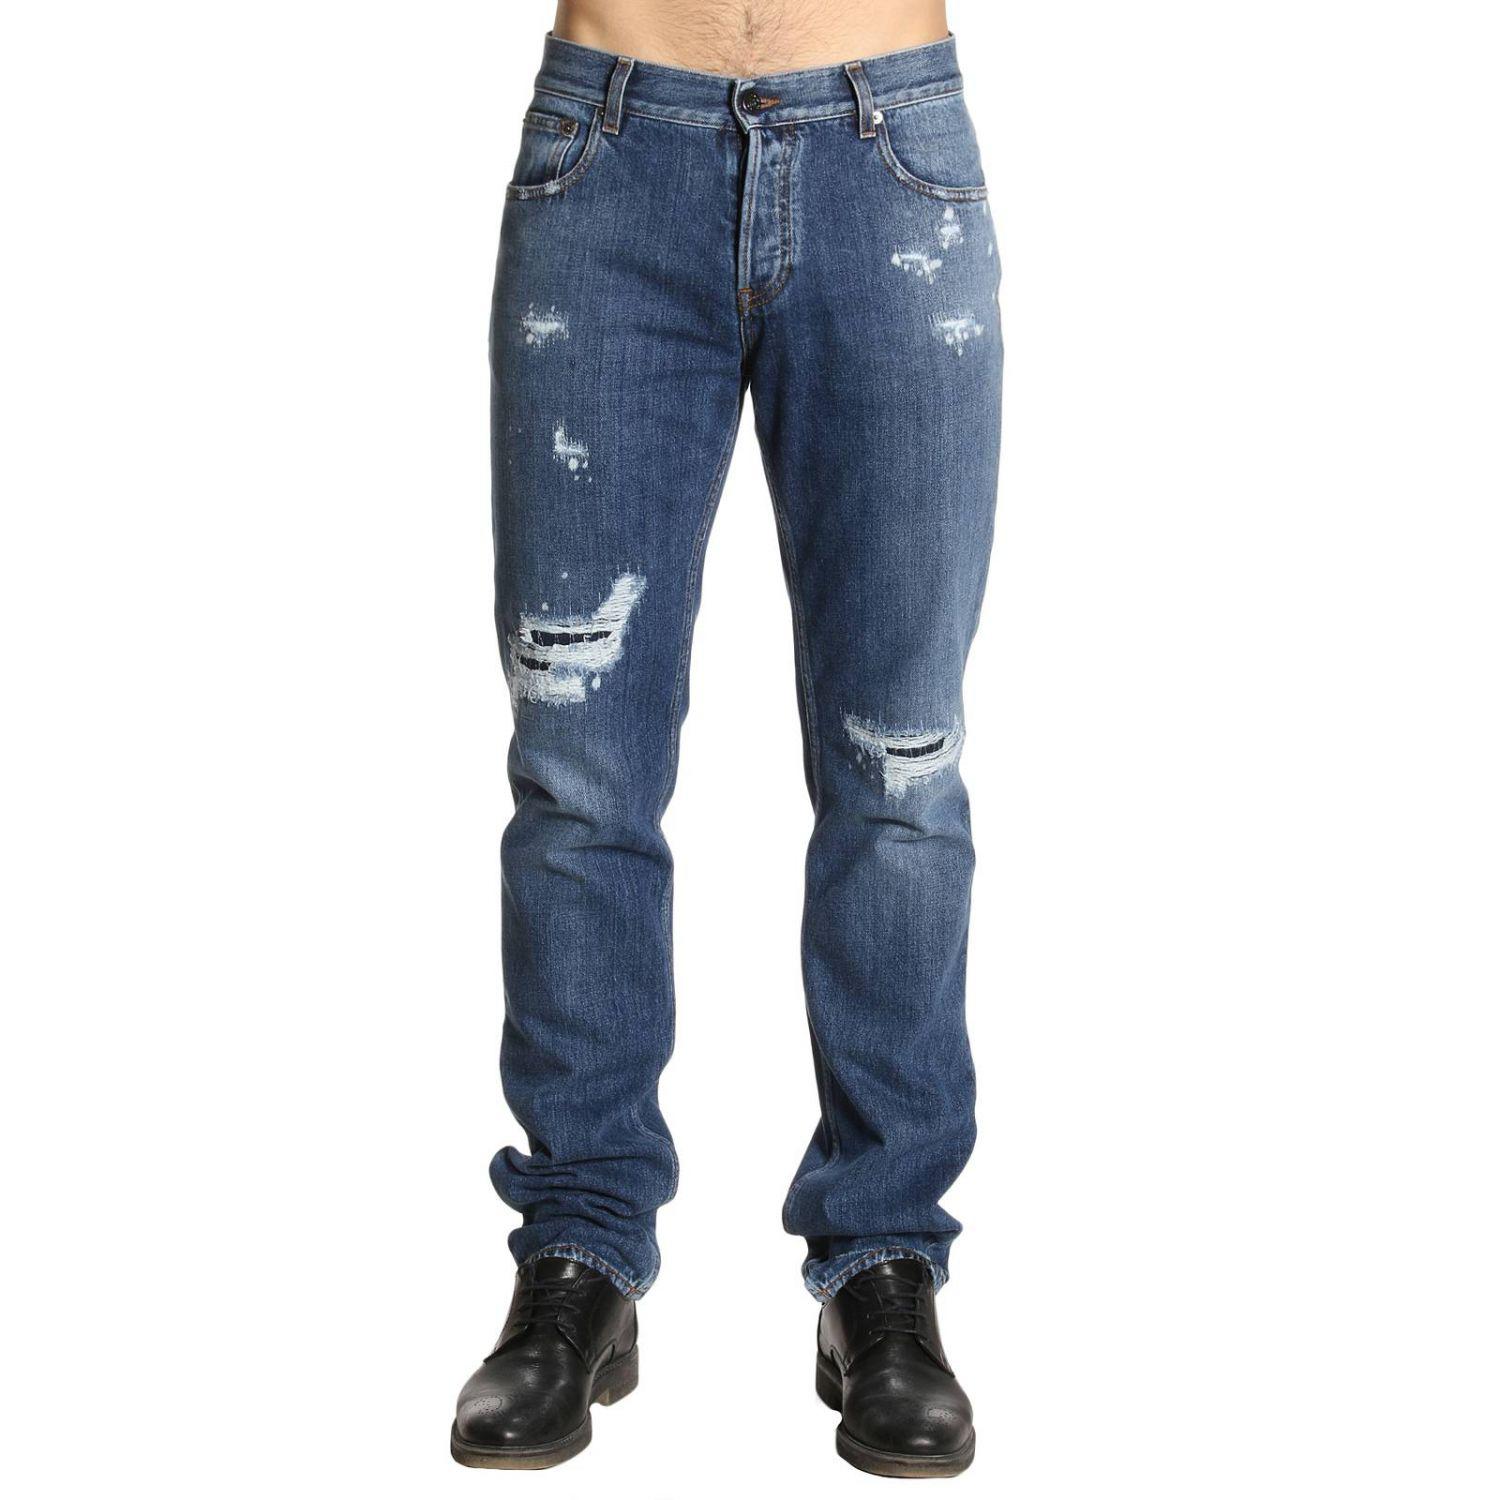 Roberto Cavalli Denim Jeans Men in Stone Washed (Blue) for Men - Lyst